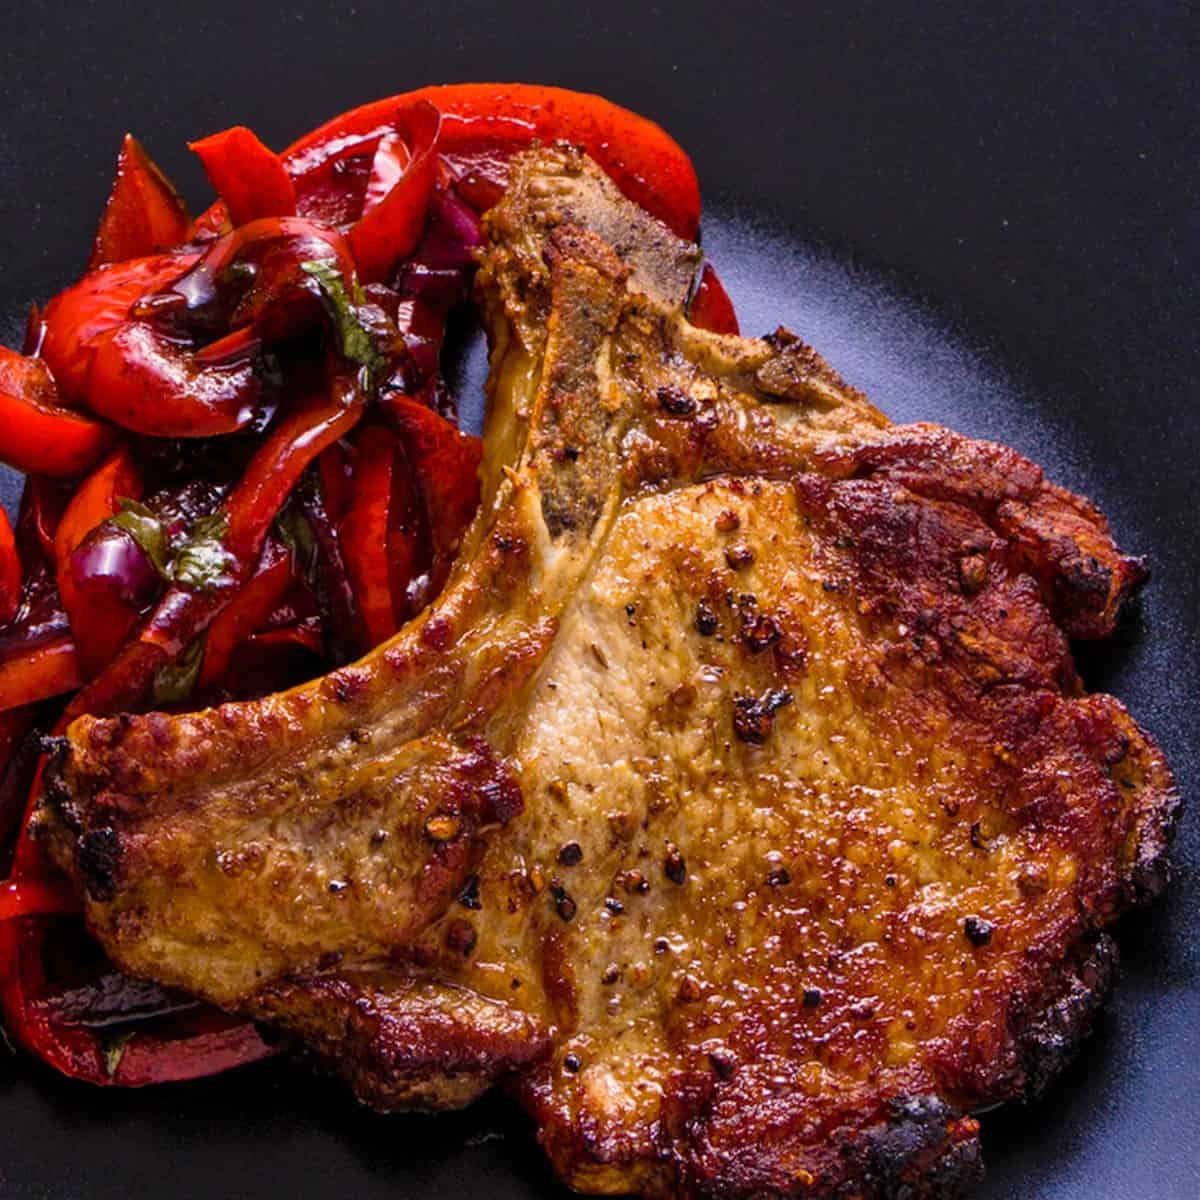 Angela Hartnett's Spanish pork chops with peppers recipe